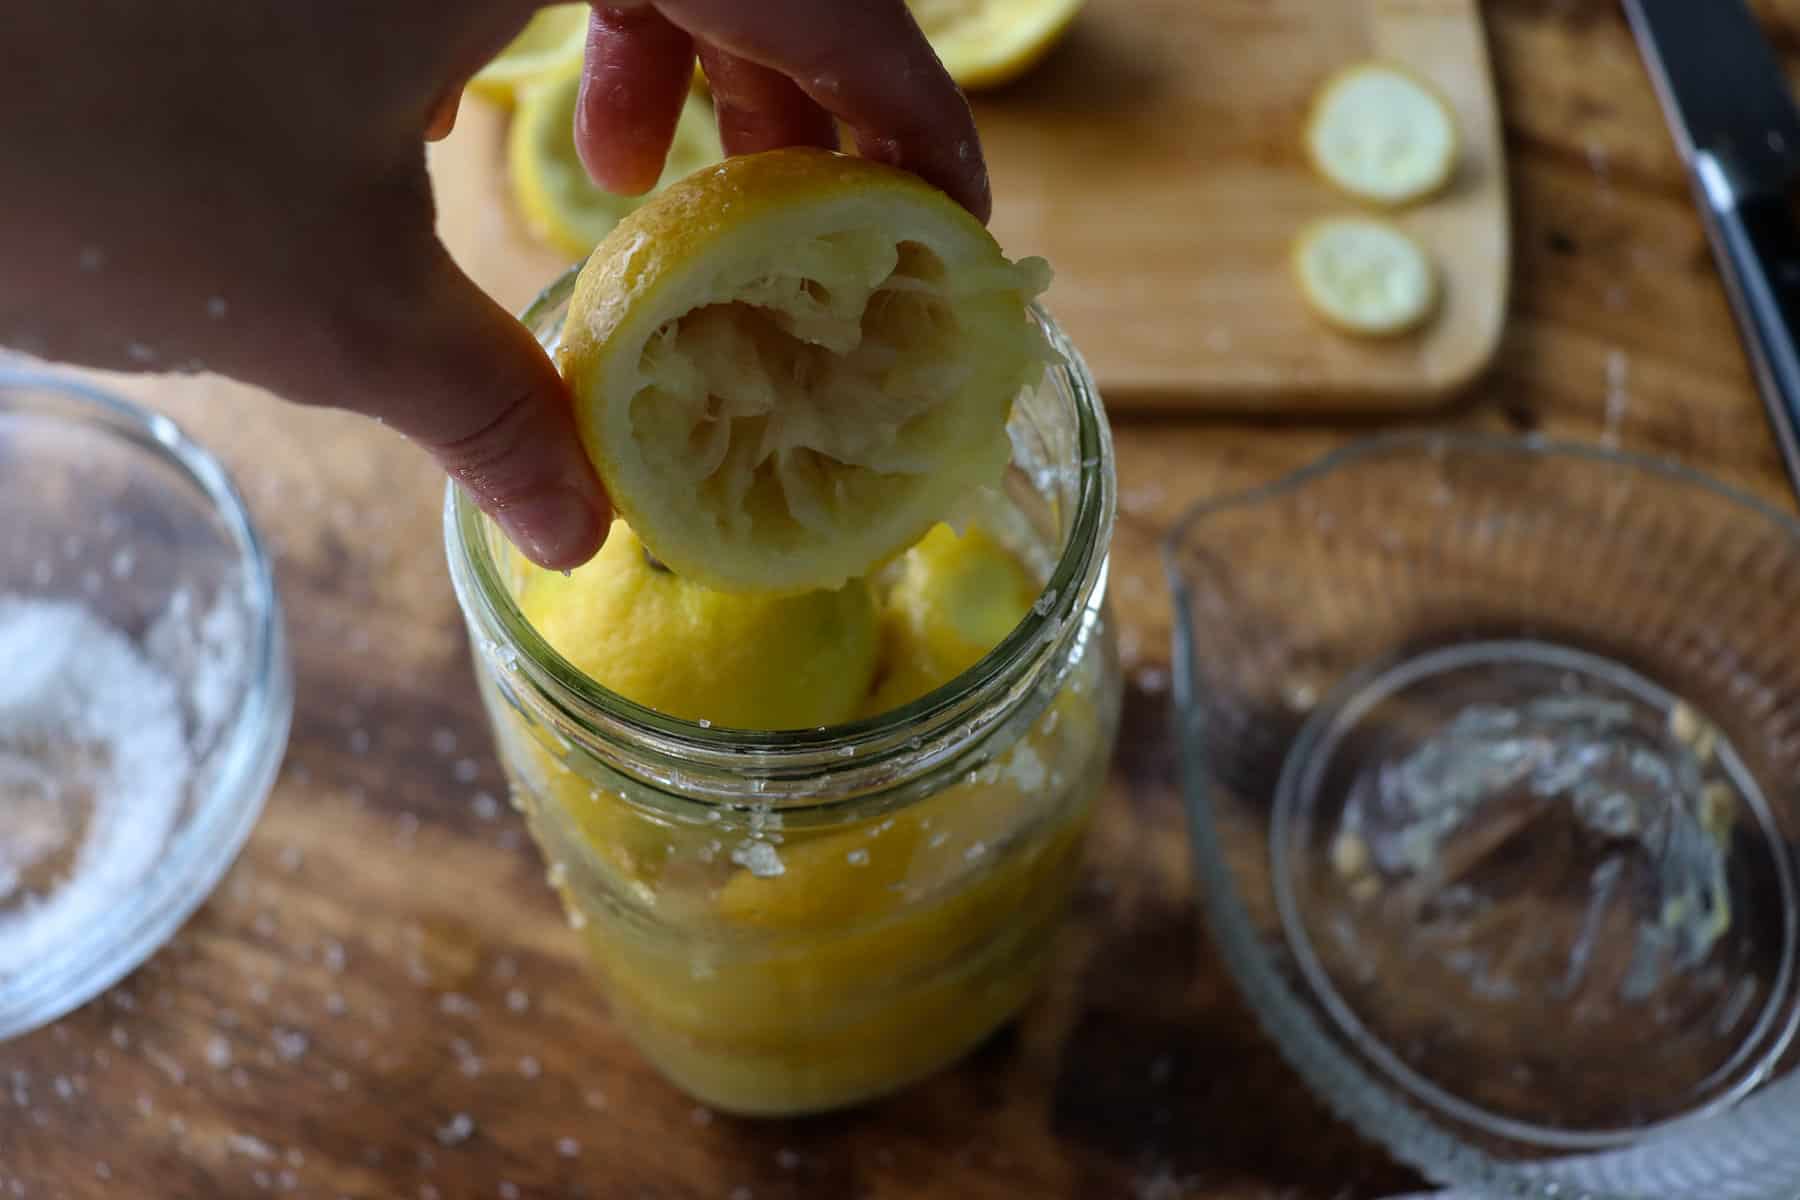 juiced lemon going into a jar of fermenting lemons